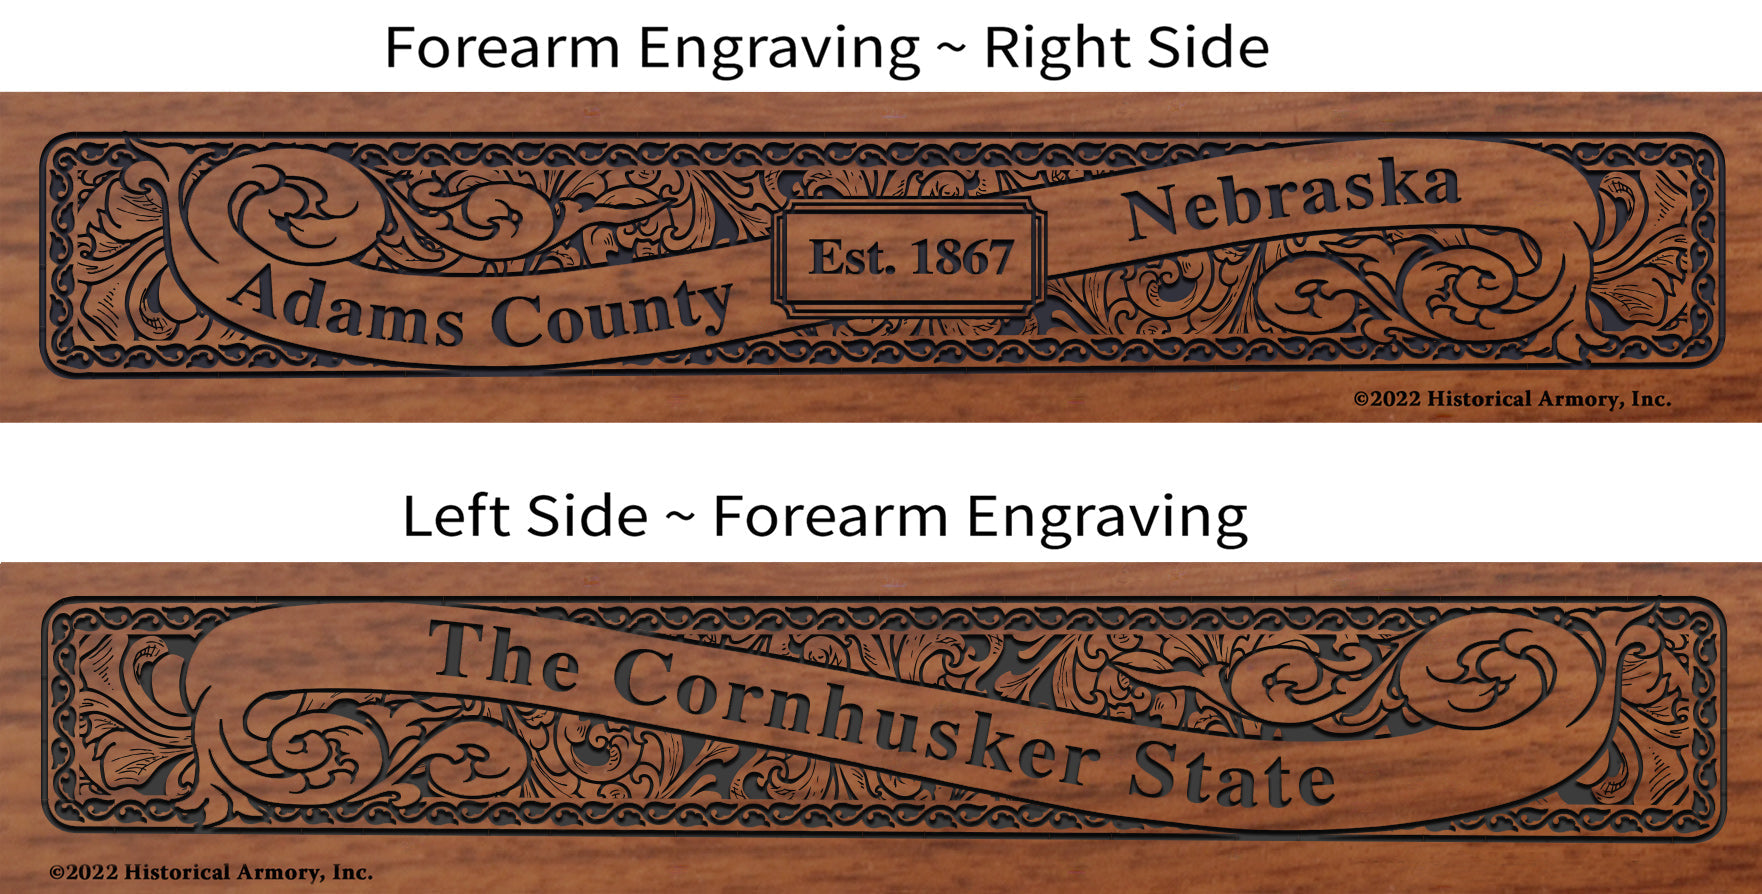 Adams County Nebraska Engraved Rifle Forearm